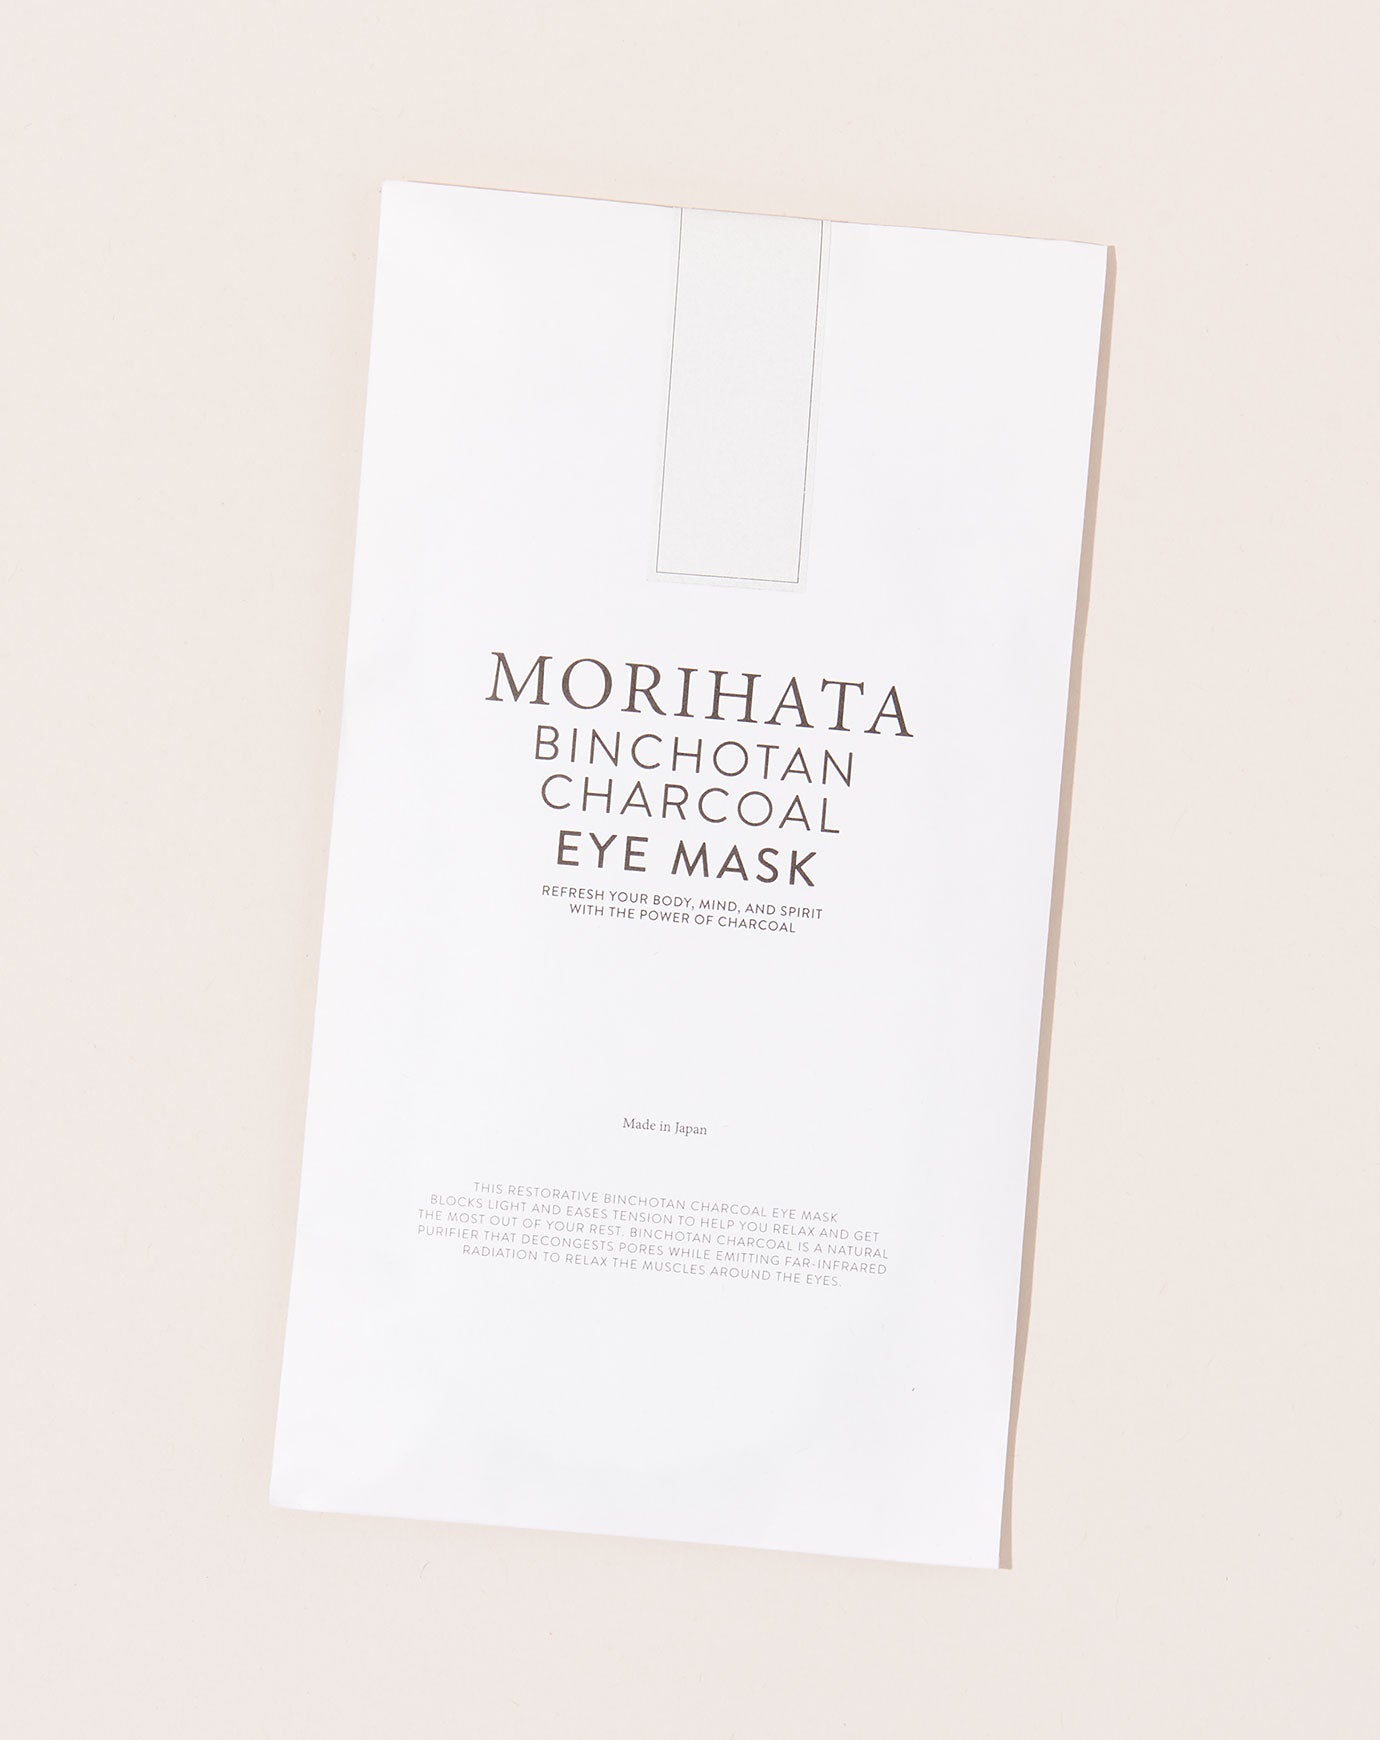 Morihata Binchotan Charcoal Eye Mask